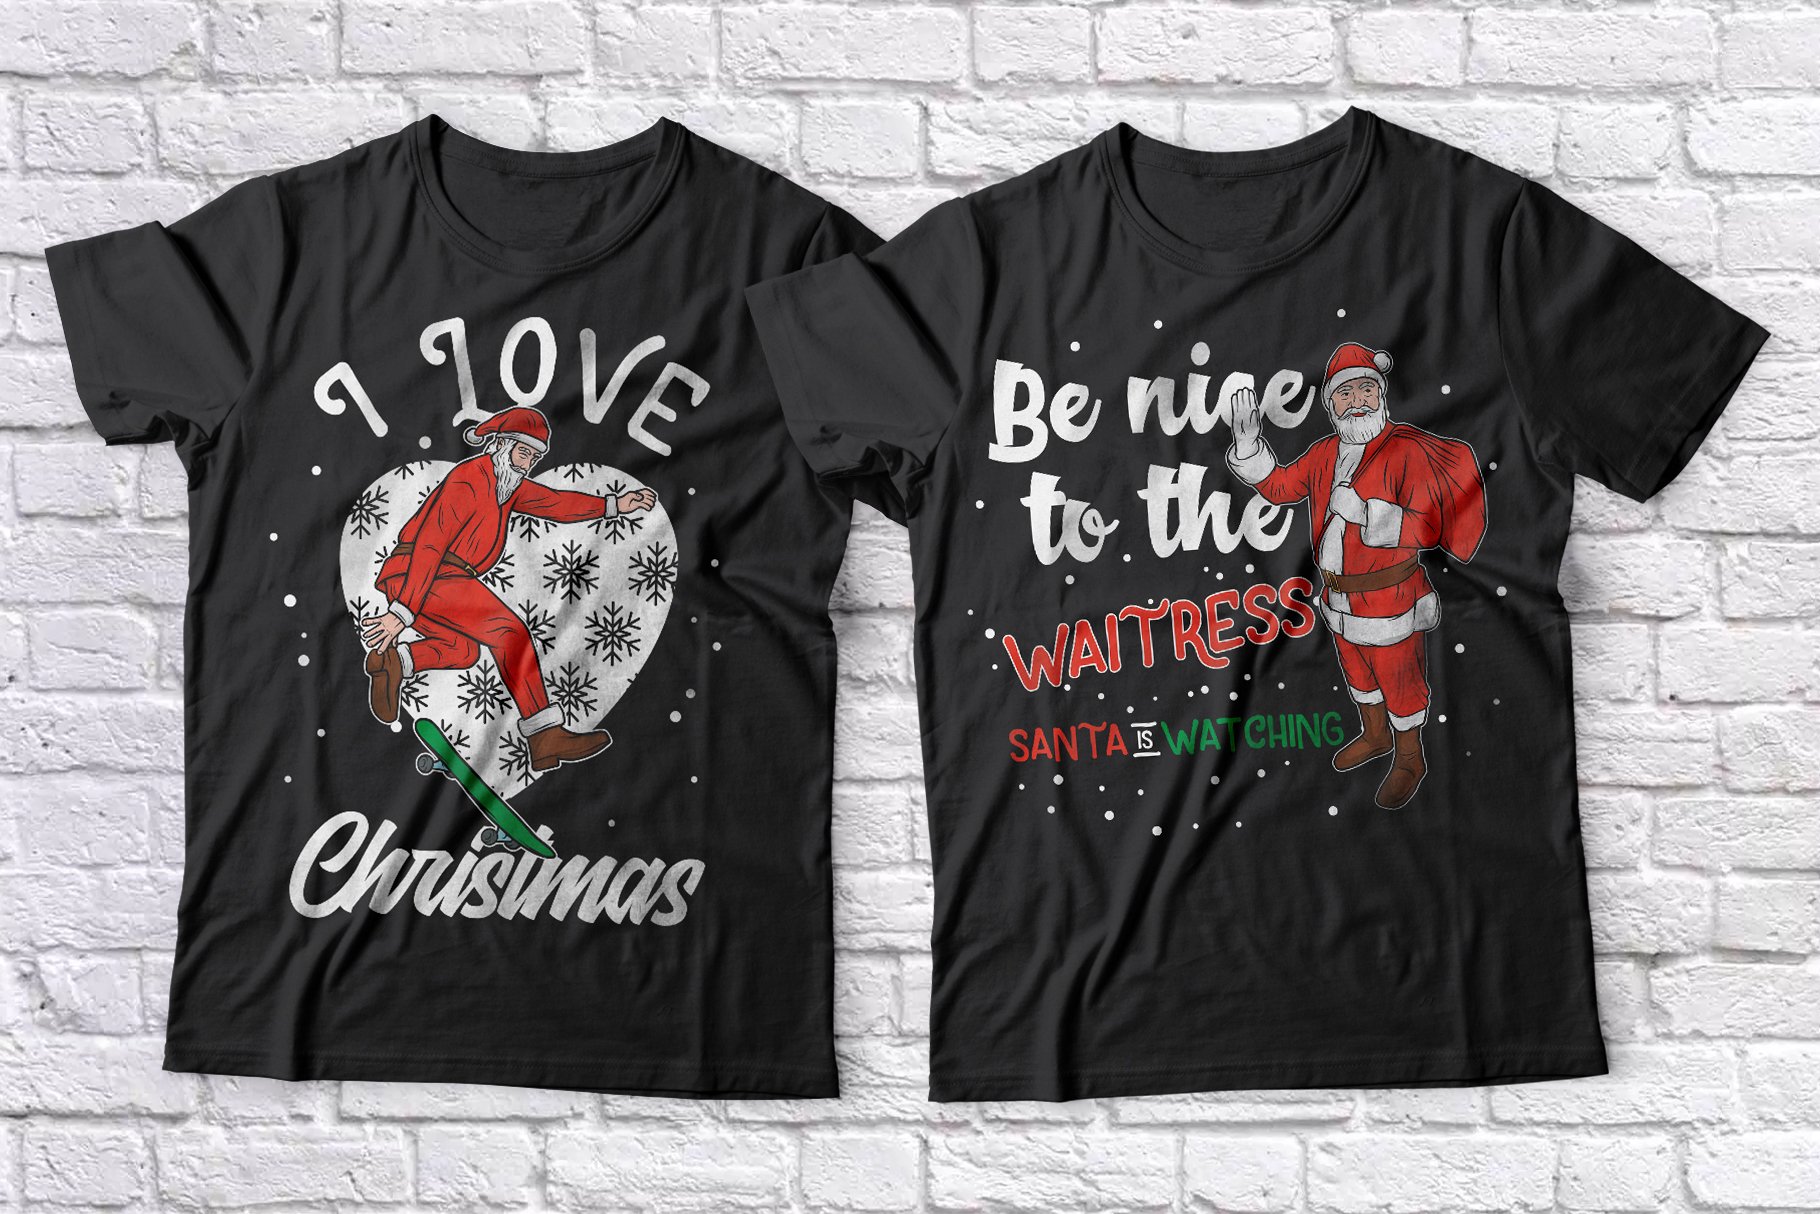 Black T-shirts with fantastic funny Santa prints.